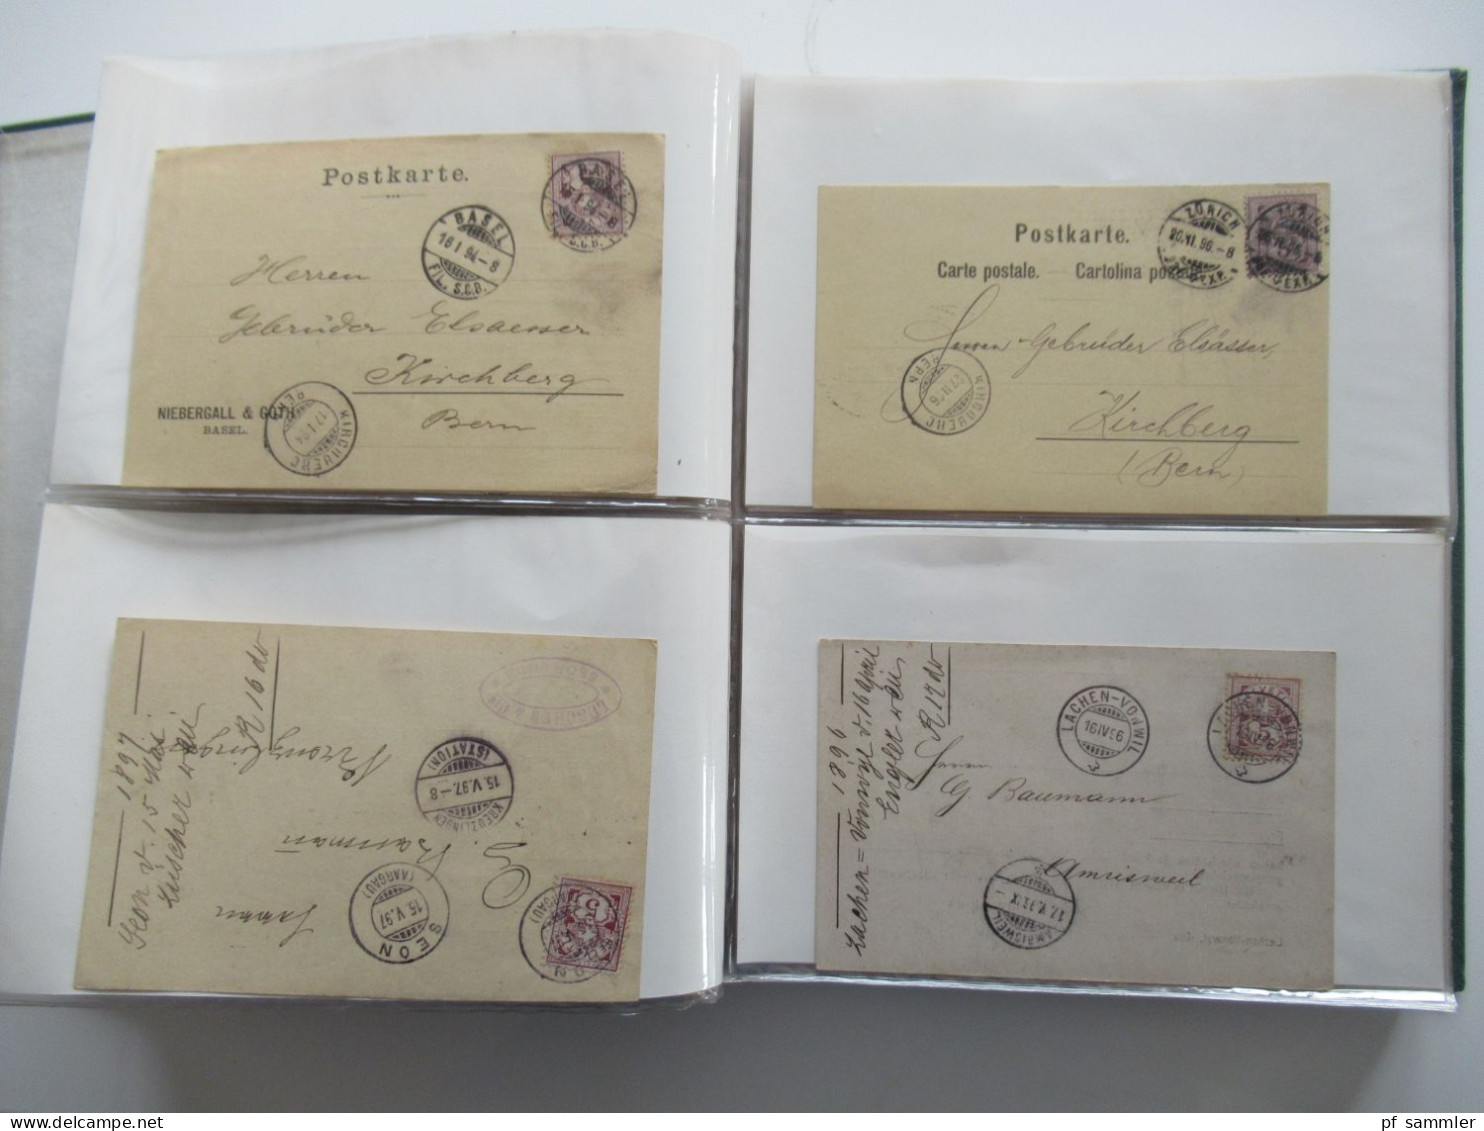 1888 - 1920er Belege Posten Schweiz Firmen PK insgesamt 120 Stück!! Bedruckte Karten / dekorative Karten/ Fundgrube!!